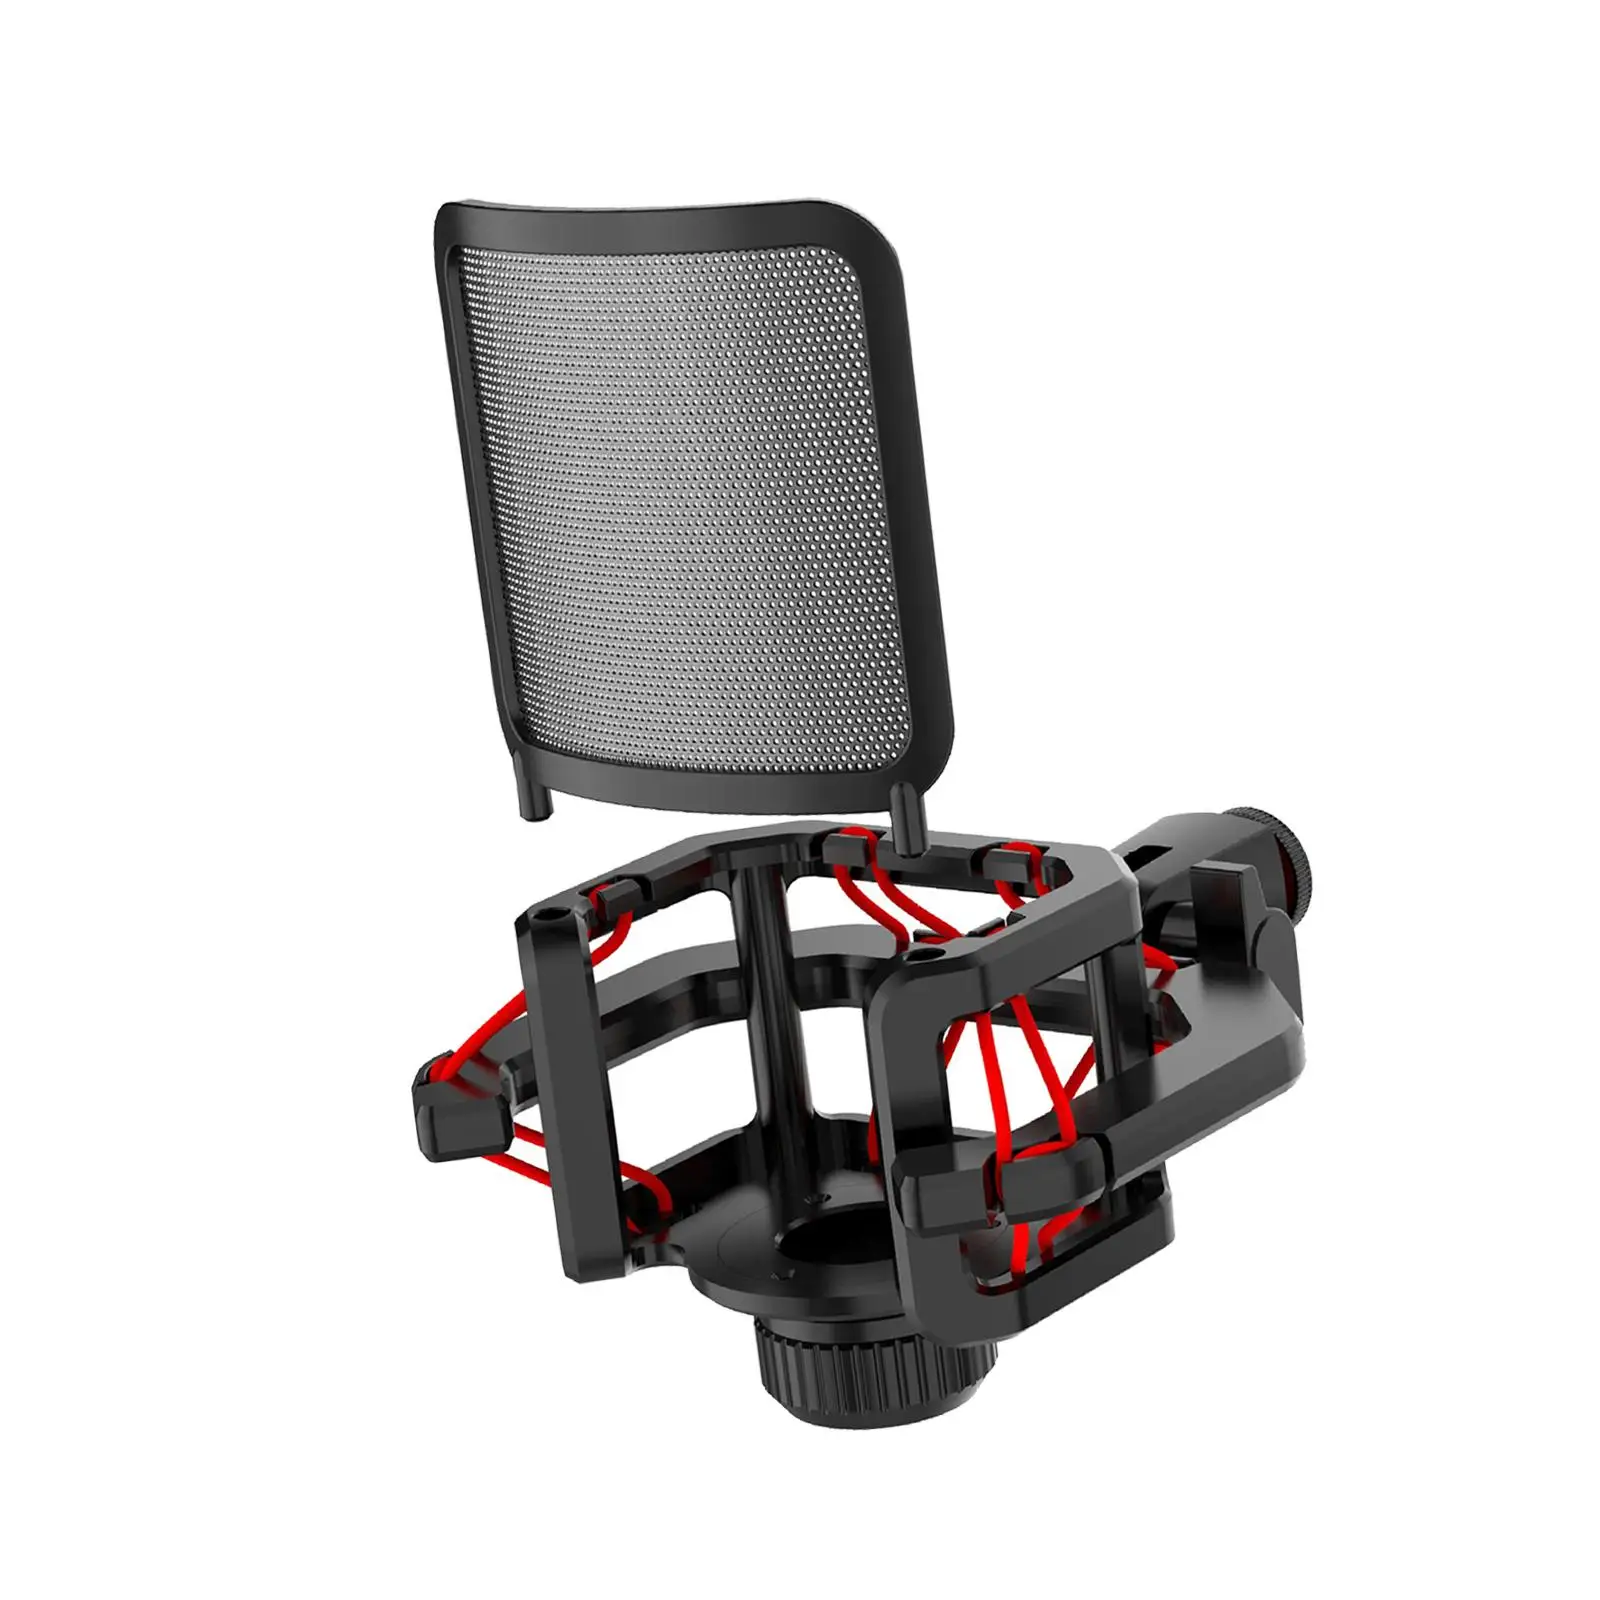 Microphone Shock Mount Adjustable Stand Professional Mic Shock Mount Holder for Condenser Microphone Studio Broadcasting